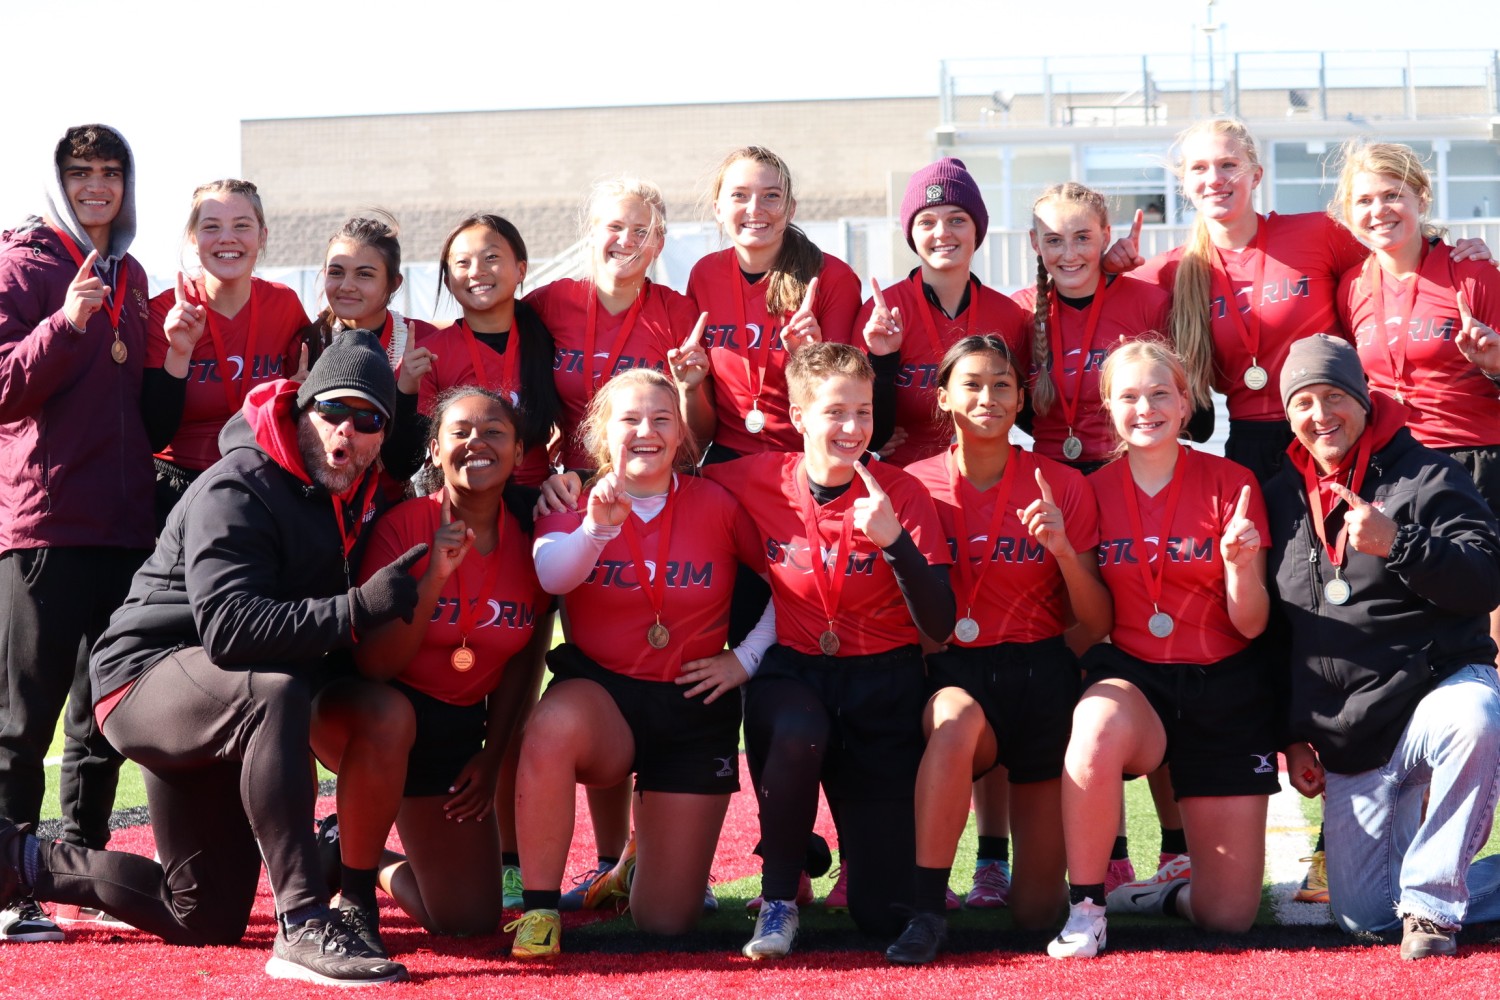 The Owyhee girls team, winners of the Western regional 7s tournament. Photo Mandie Disbrow.